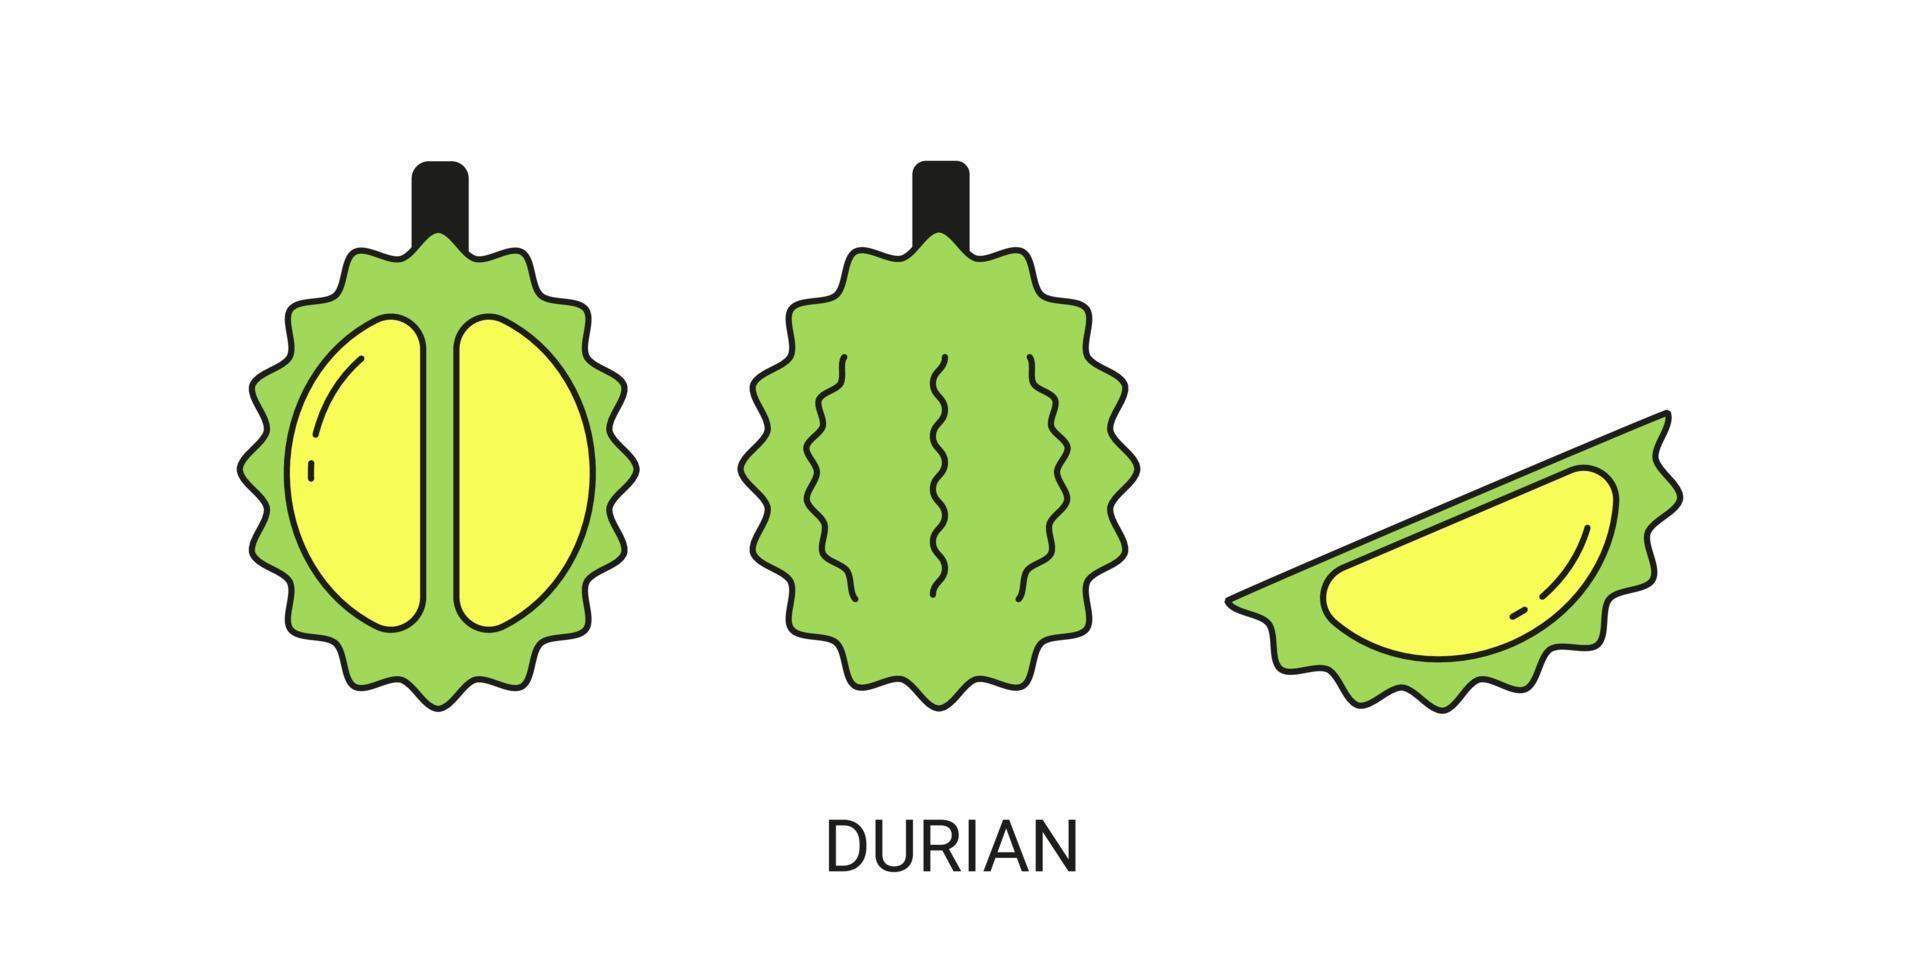 elemento de ícone de fruta exótica durian para web vetor